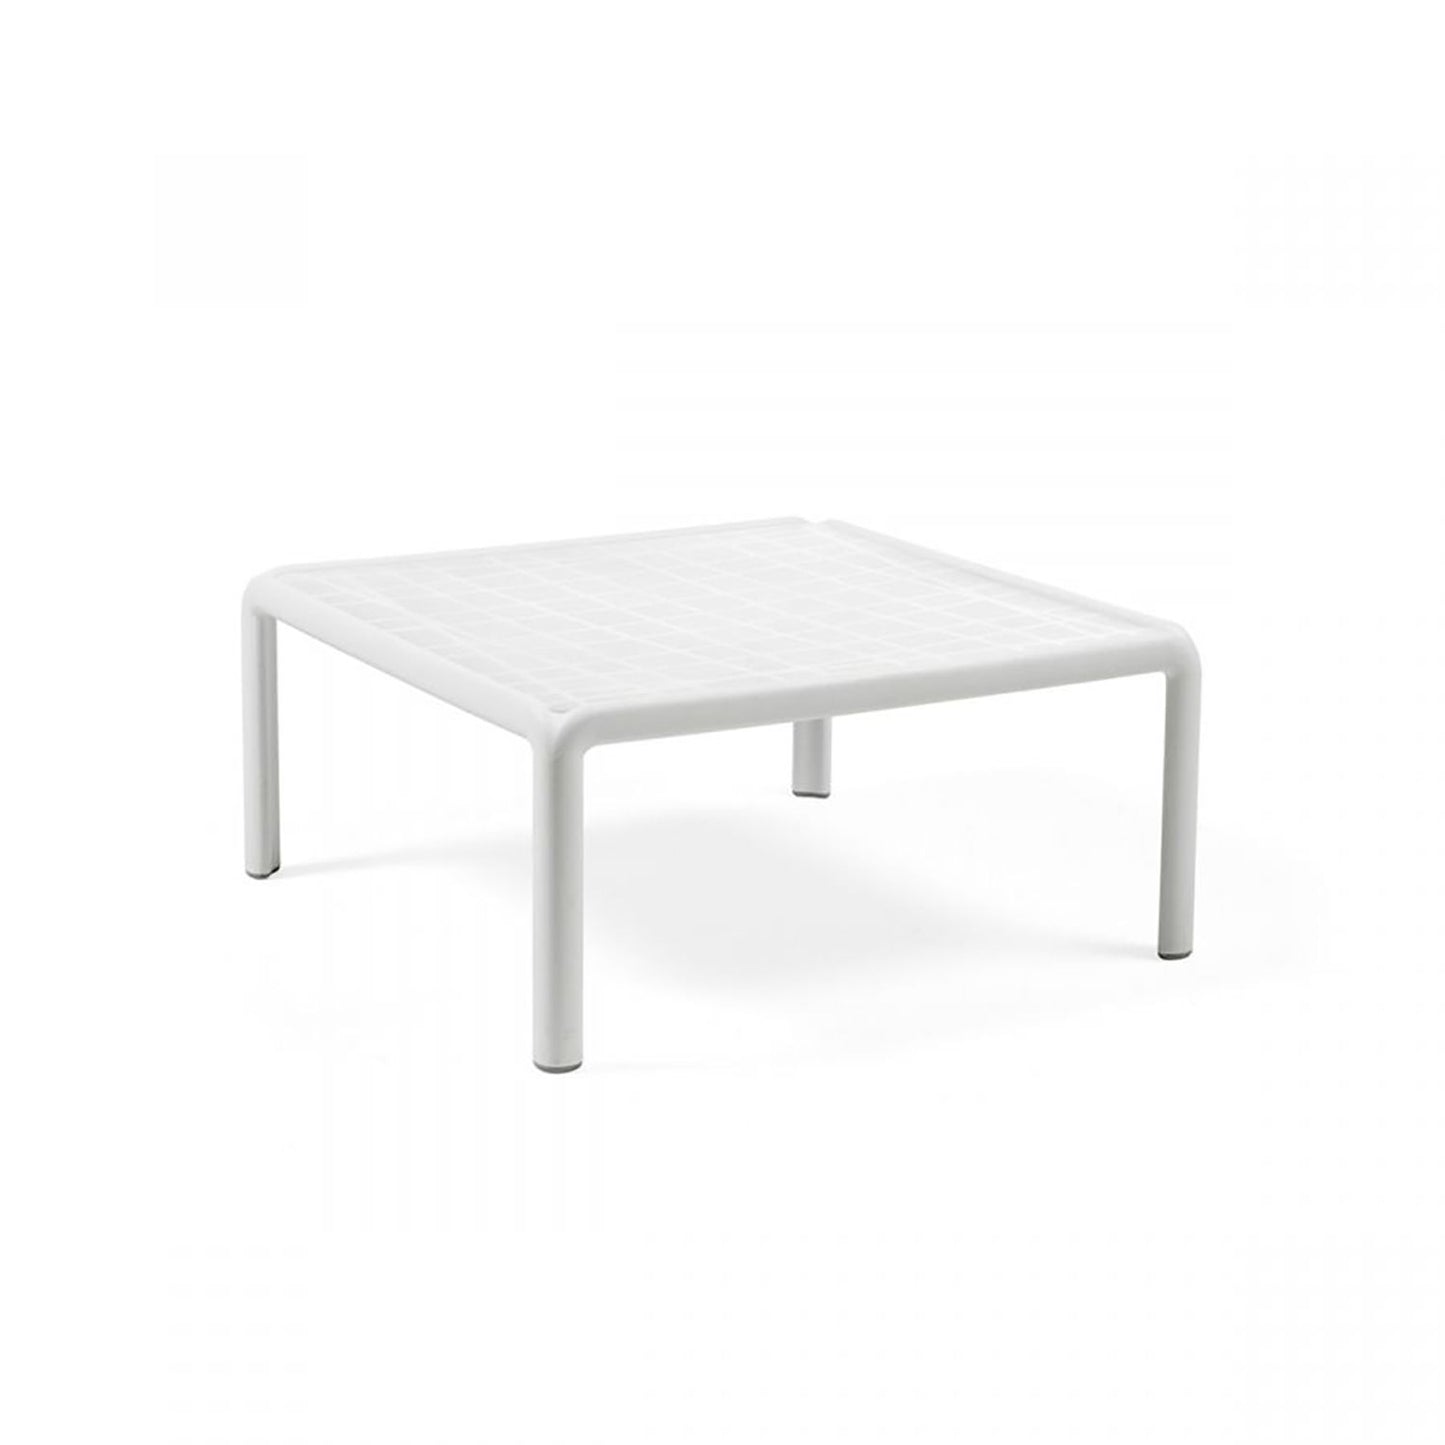 Komodo Coffee Table Without Glass By Nardi - White